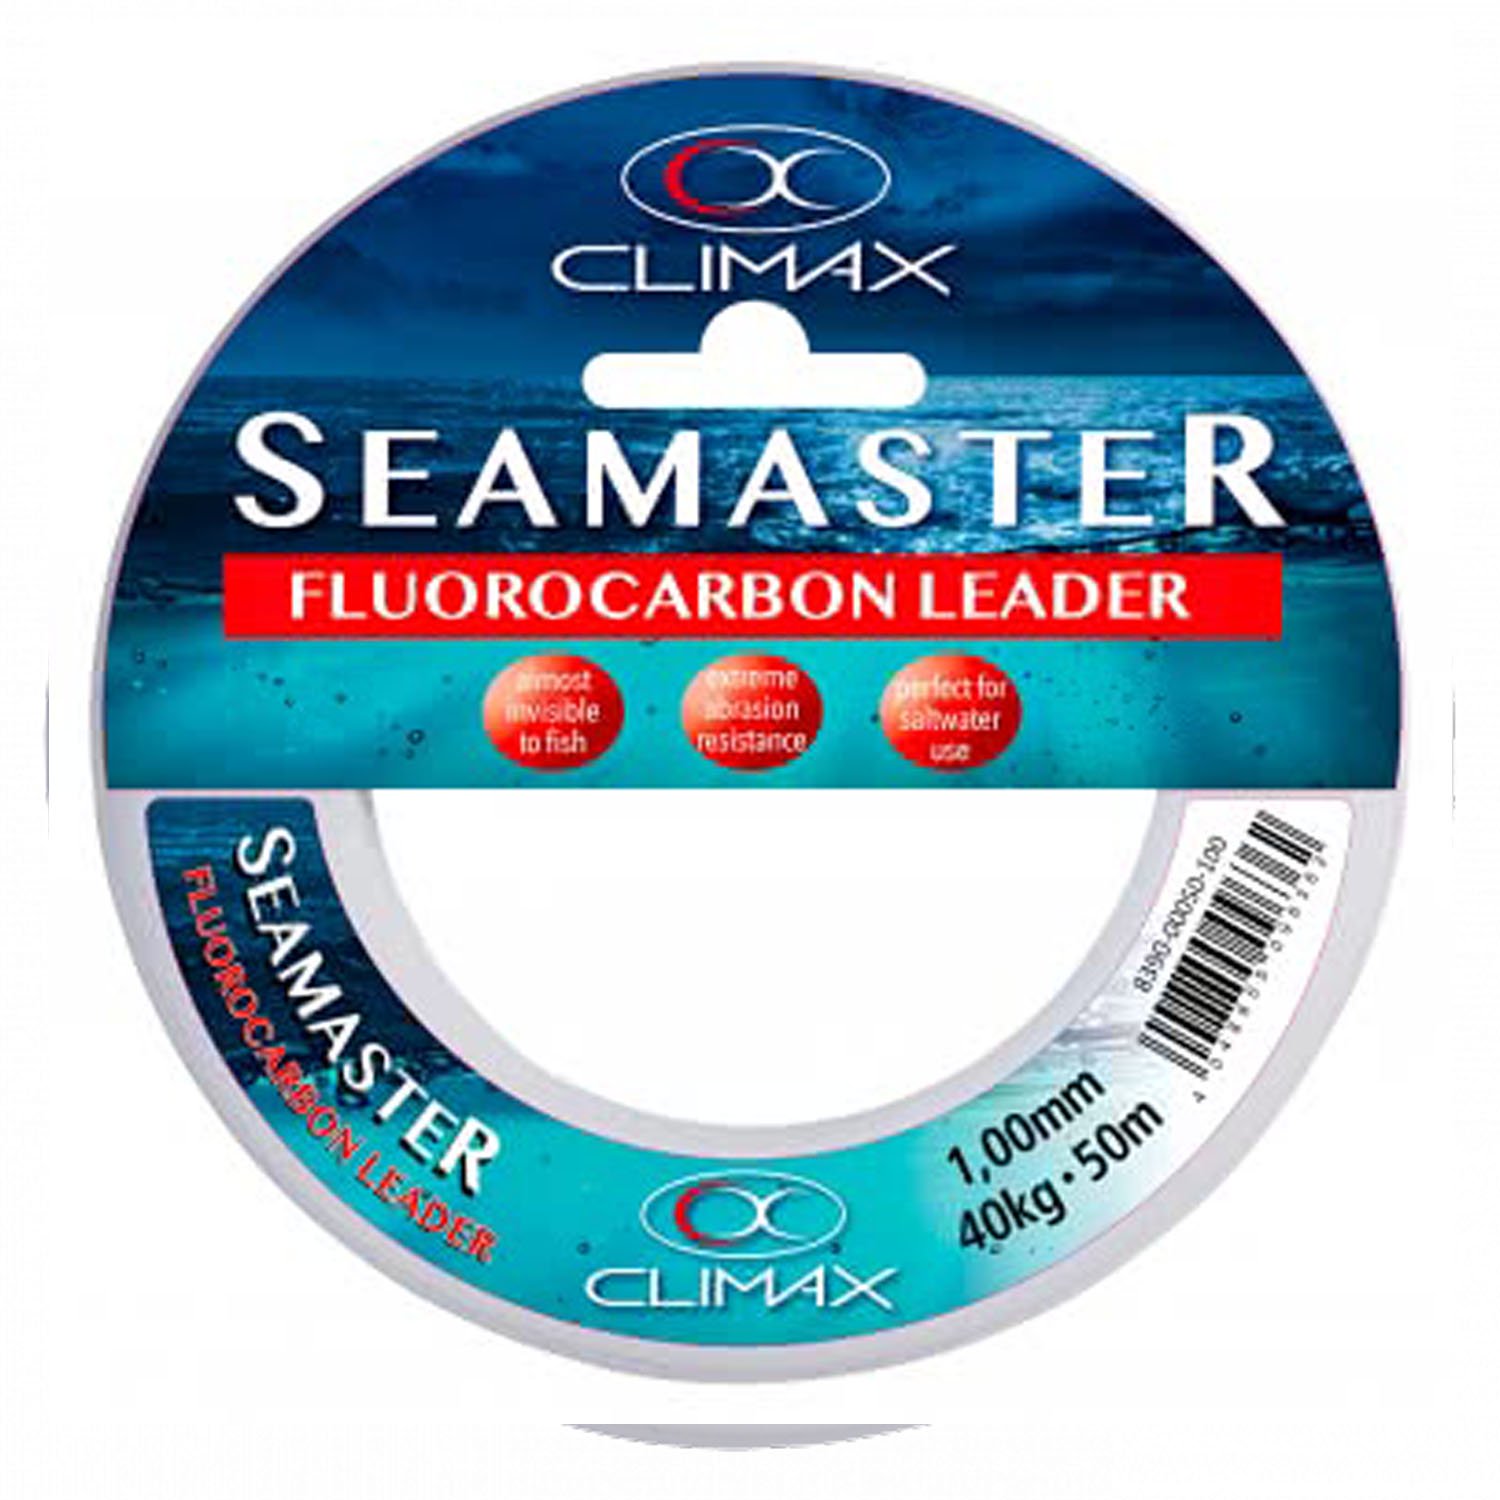 Bas De Ligne Seamaster Fluorocarbon Leader 50m Climax